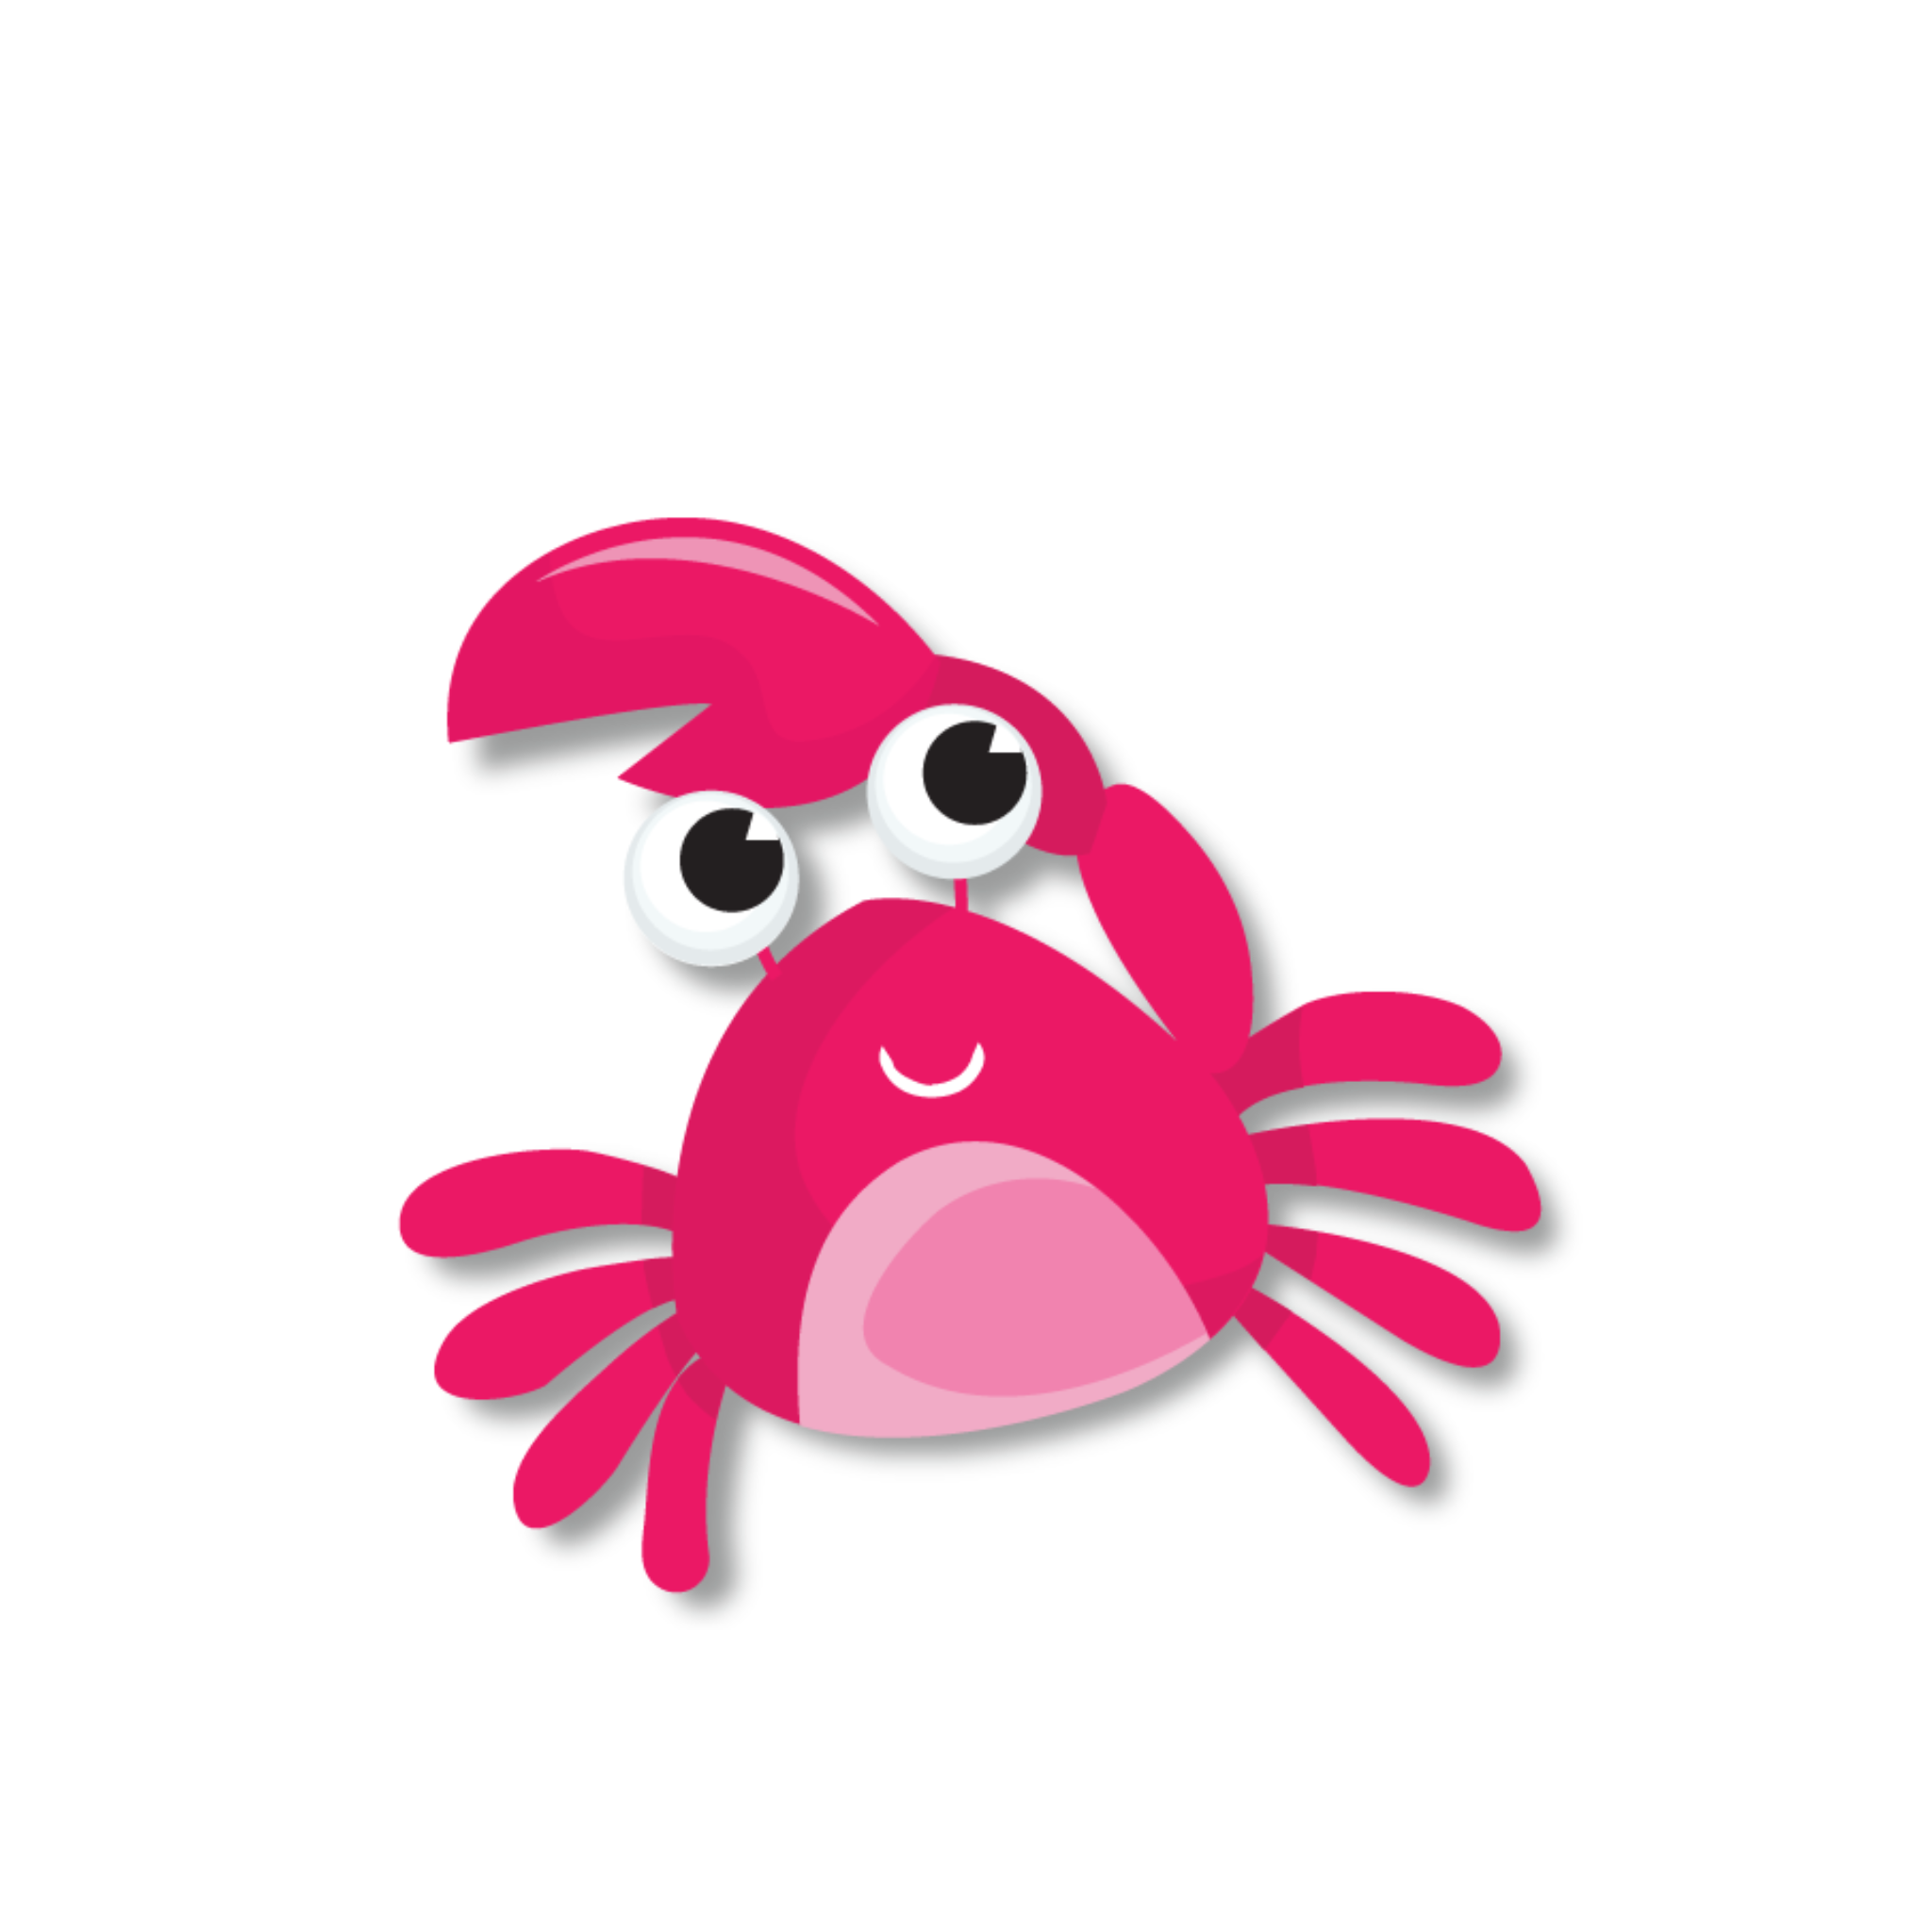 Image of a cartoon pink crab